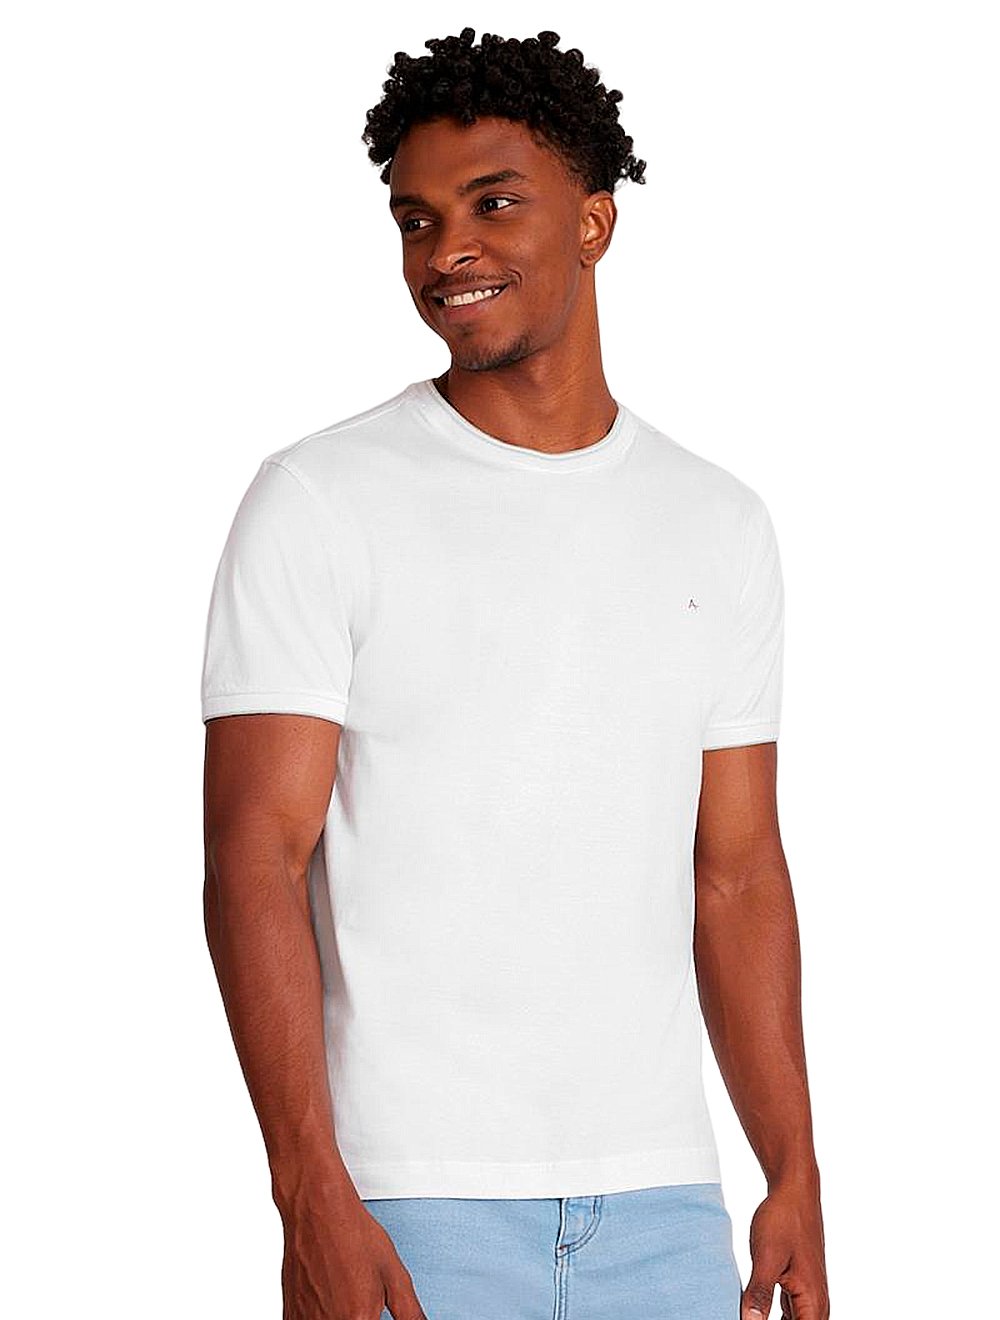 Camiseta Aramis Masculina Grey Stripes Neck Branca